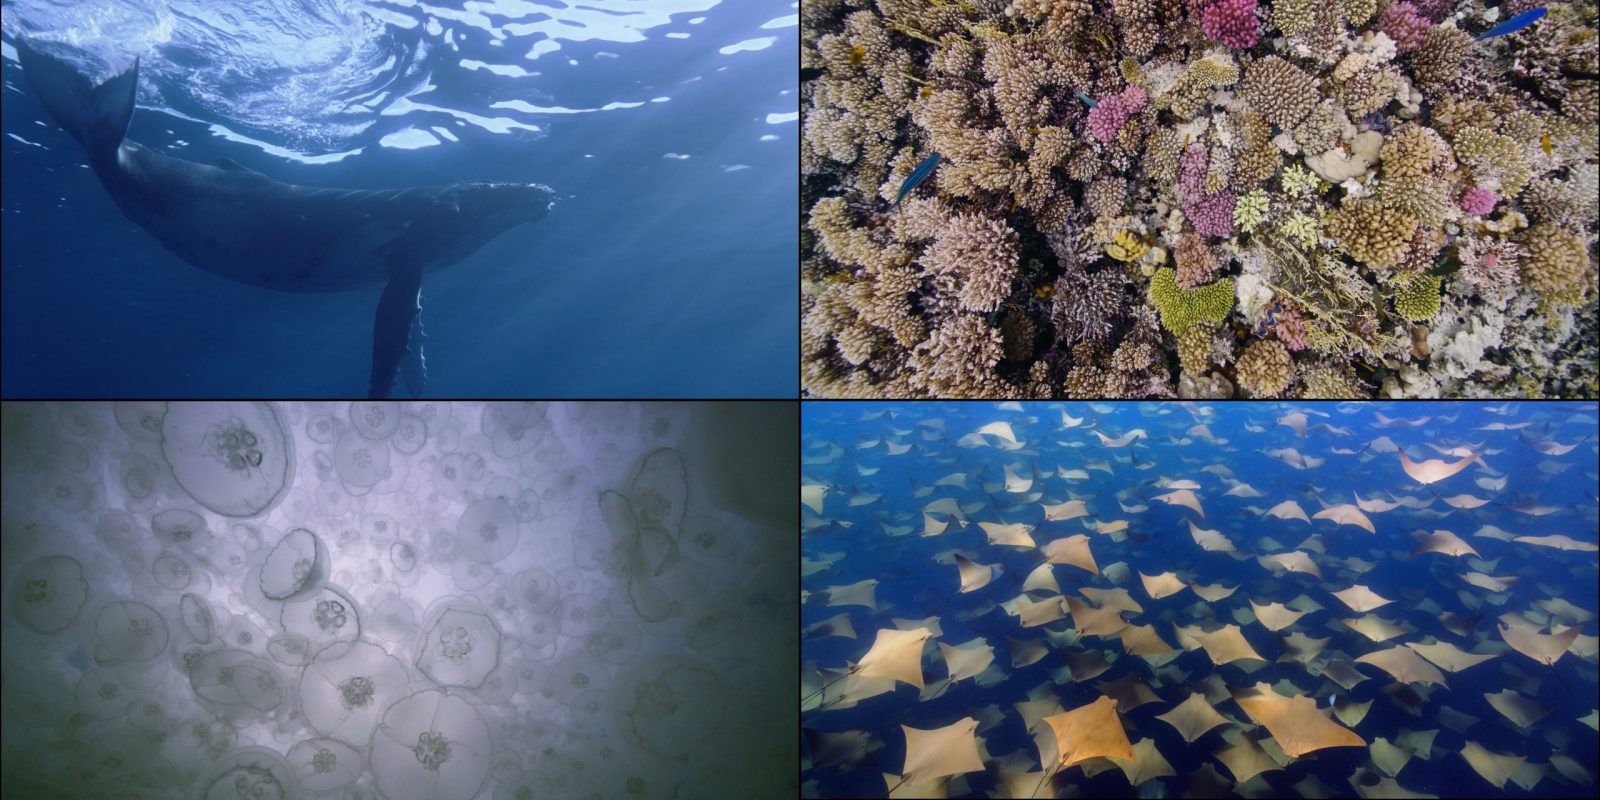 Apple TV adds another eleven stunning underwater video screensavers